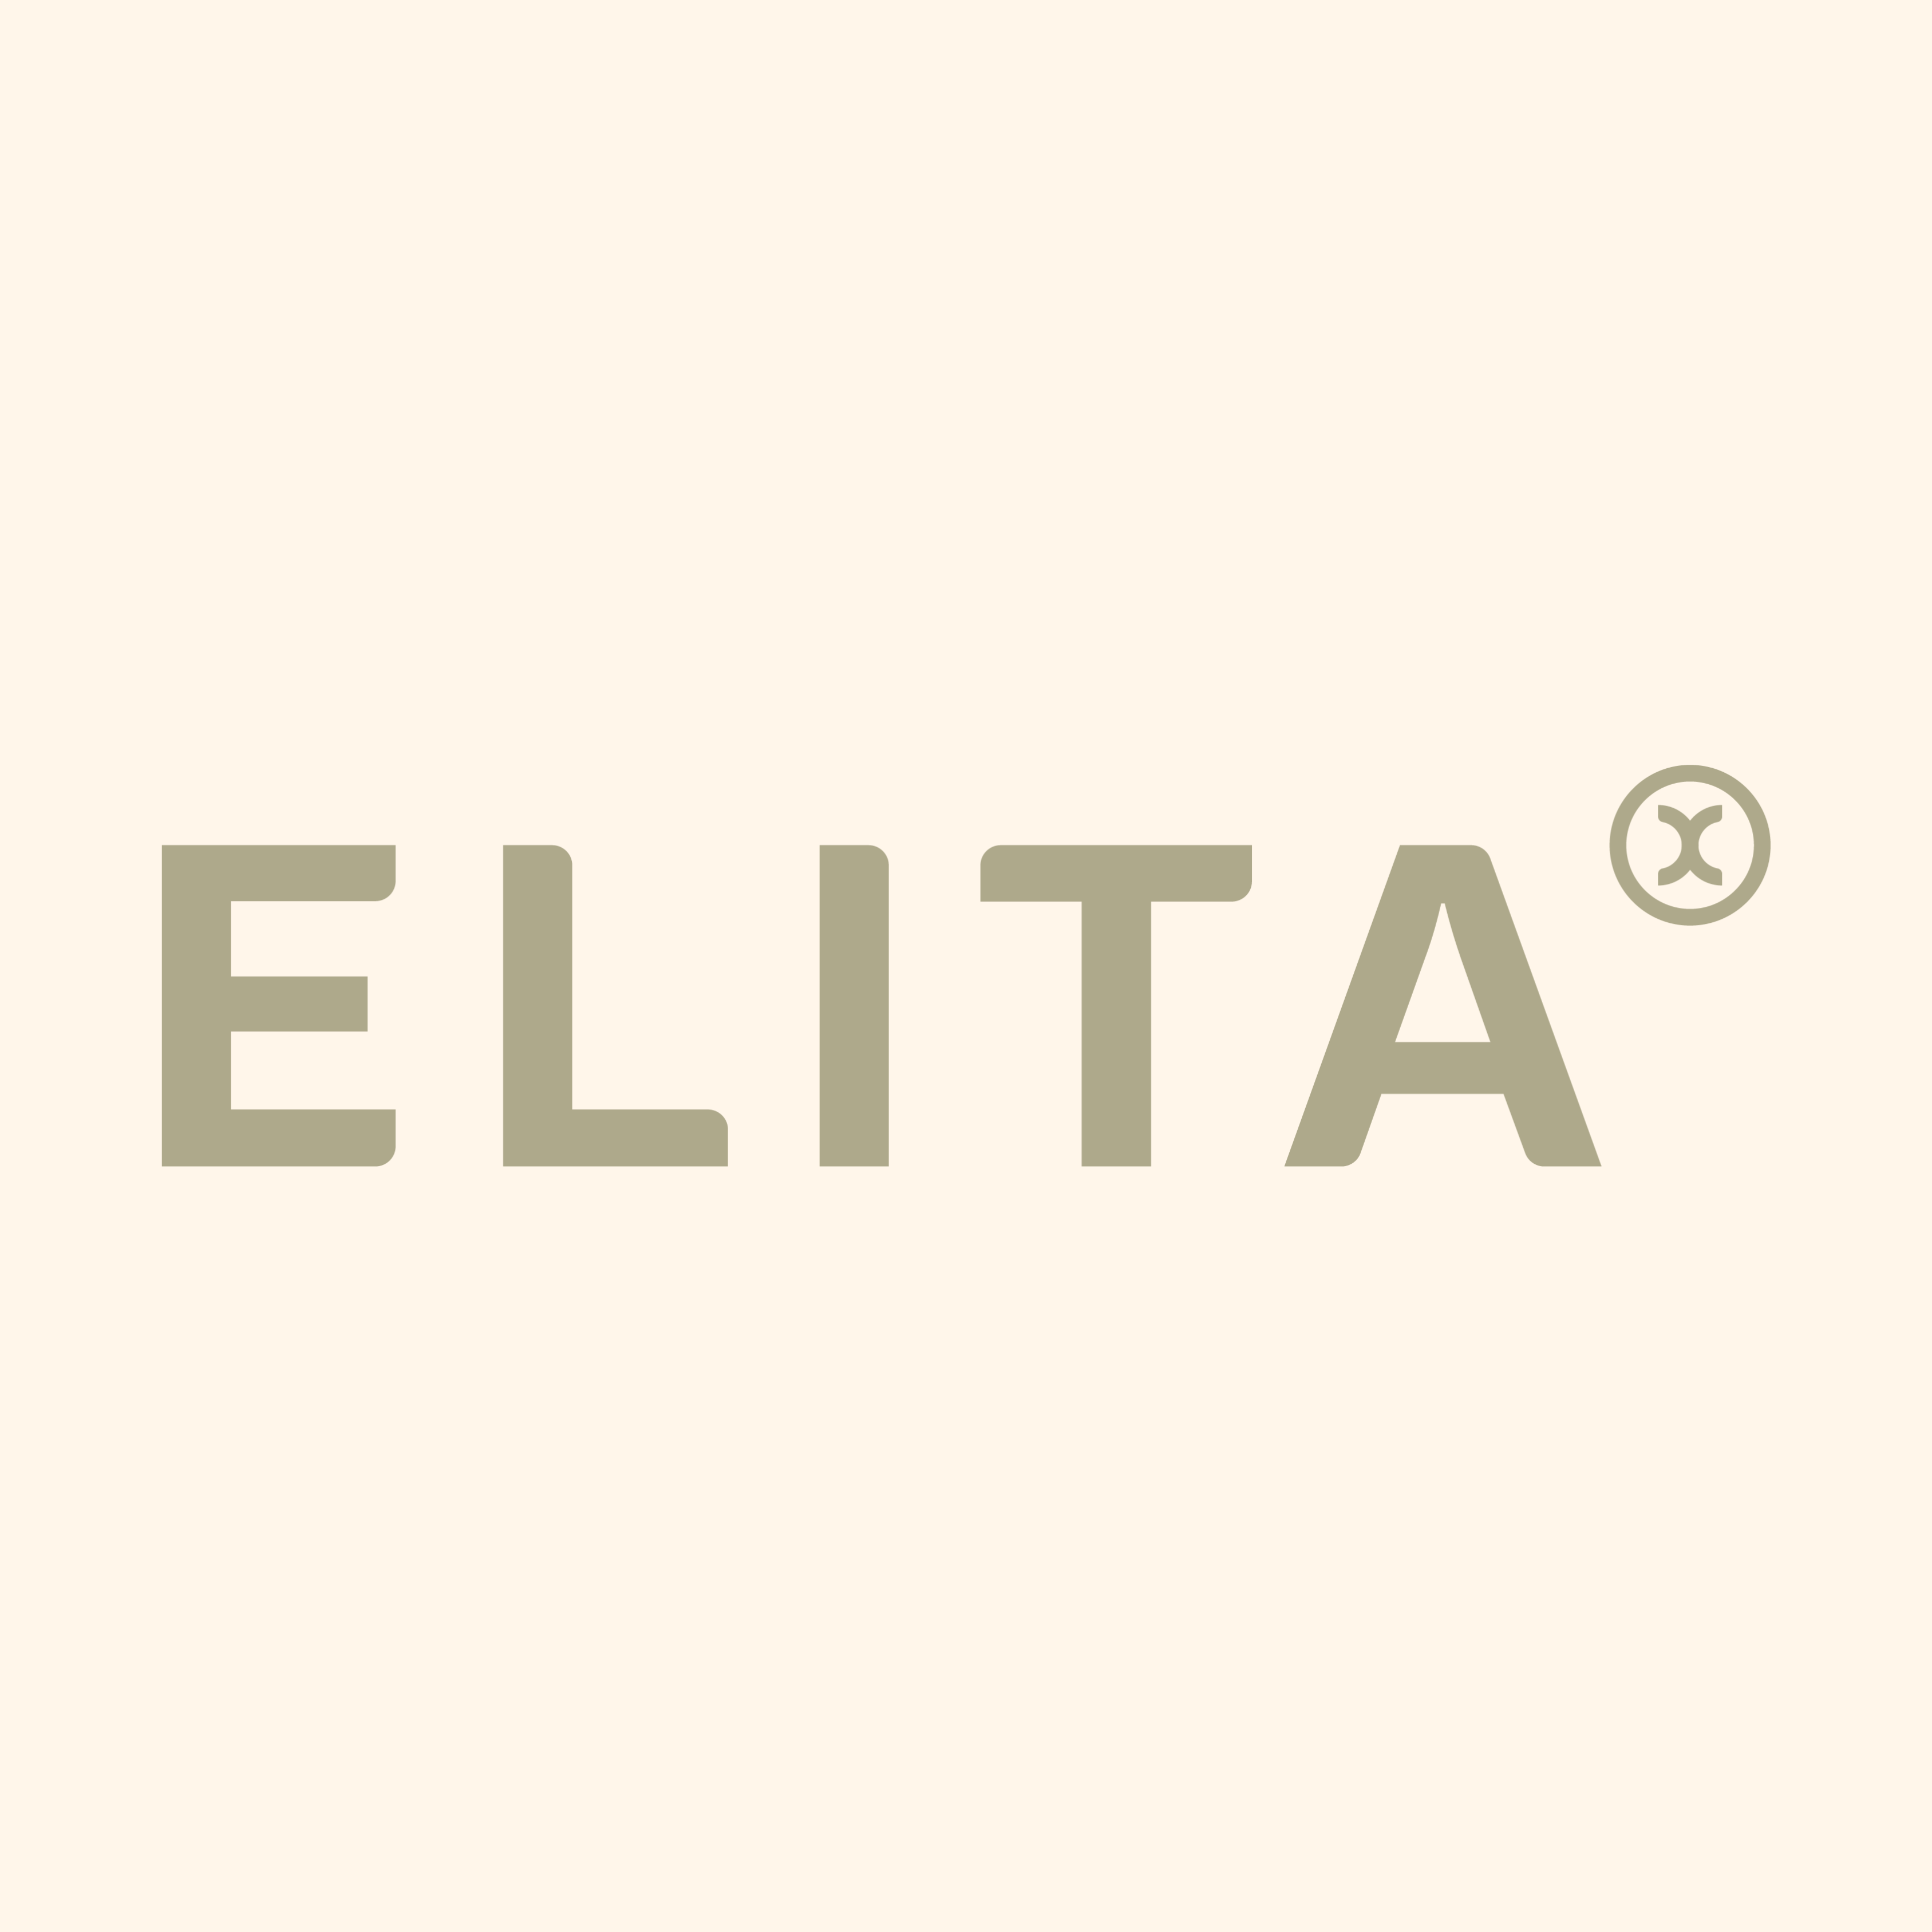 PT Elita Sejahtera Indonesia logo